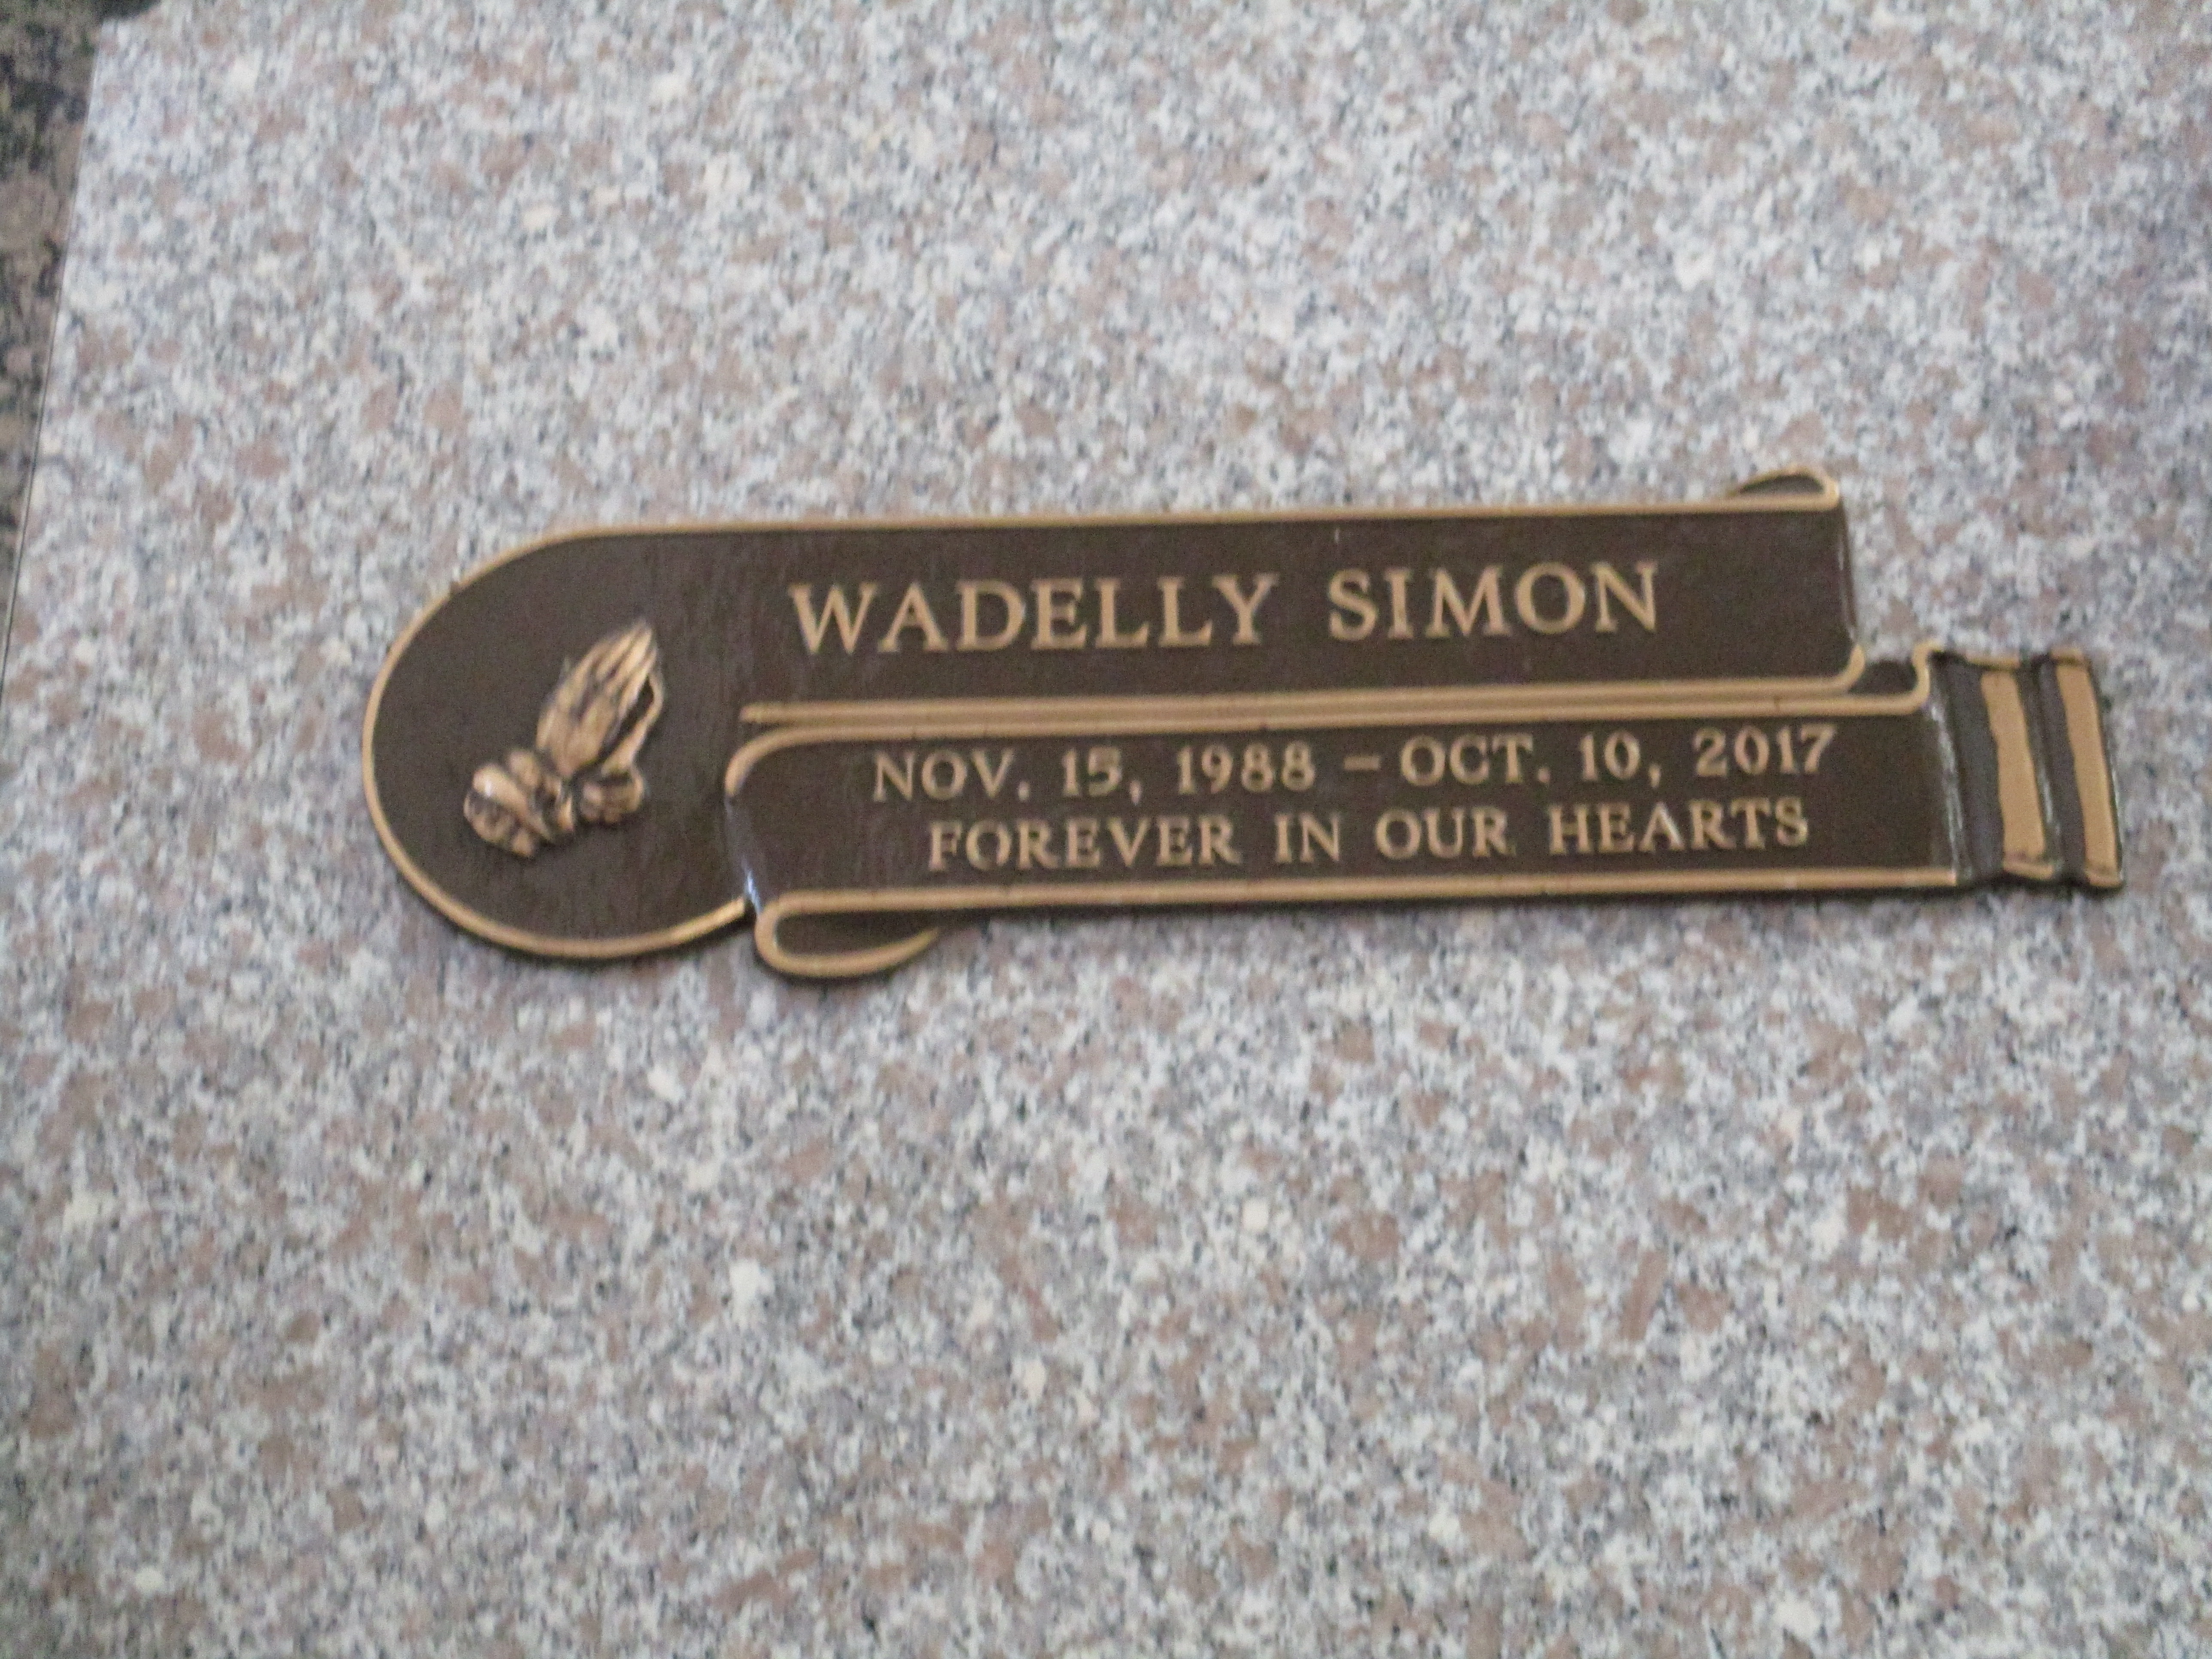 Wadelly Simon